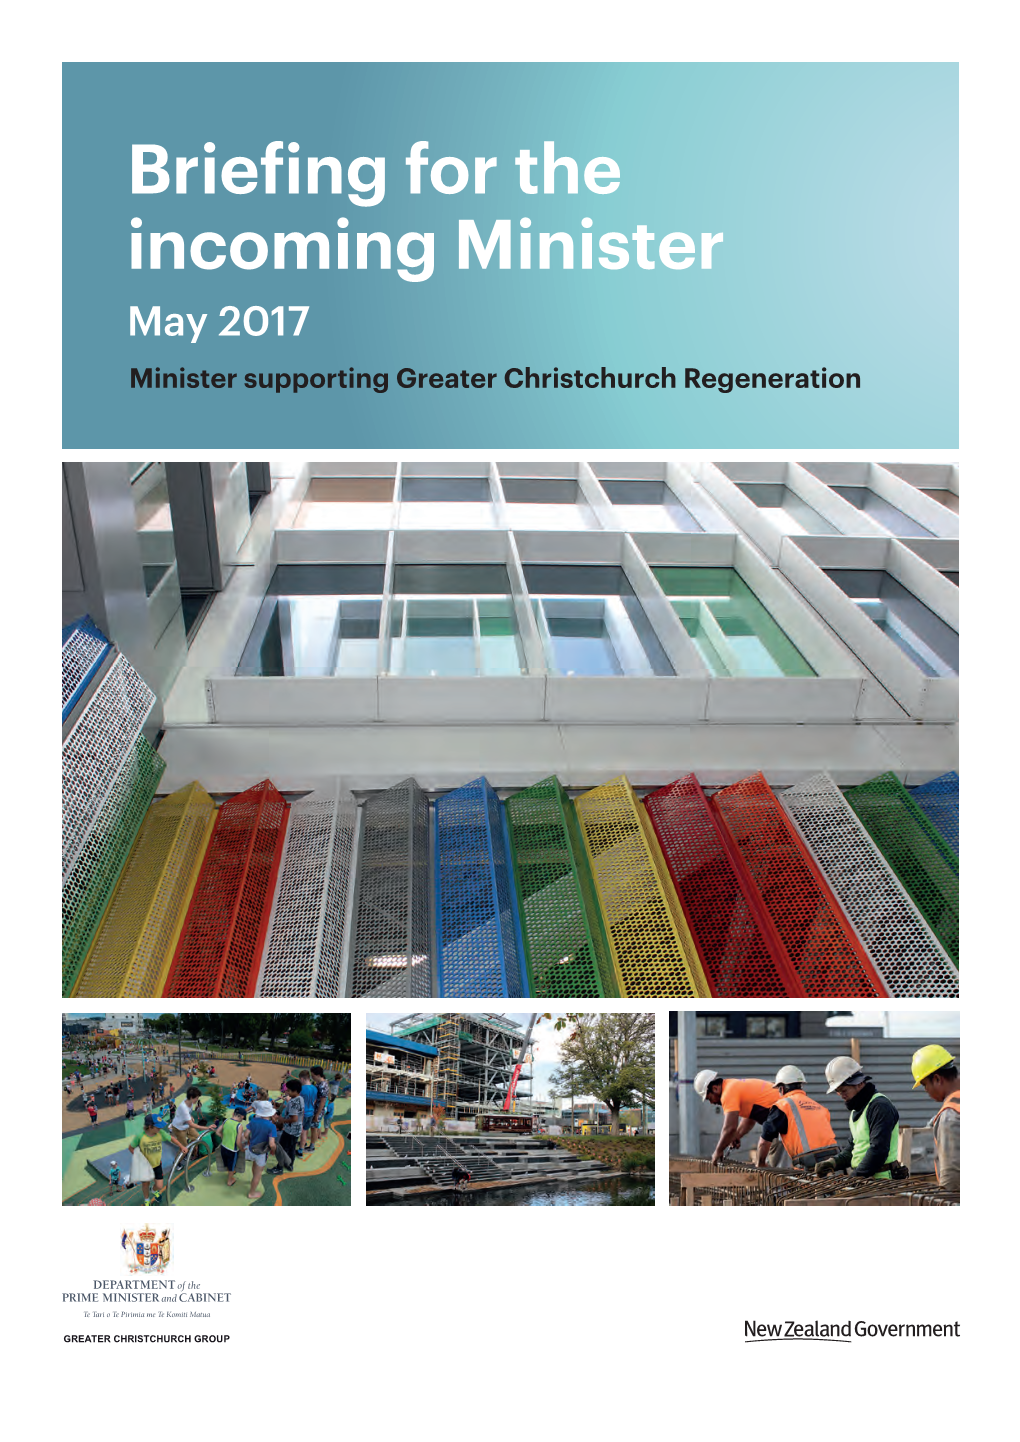 BIM: Minister Supporting Greater Christchurch Regeneration